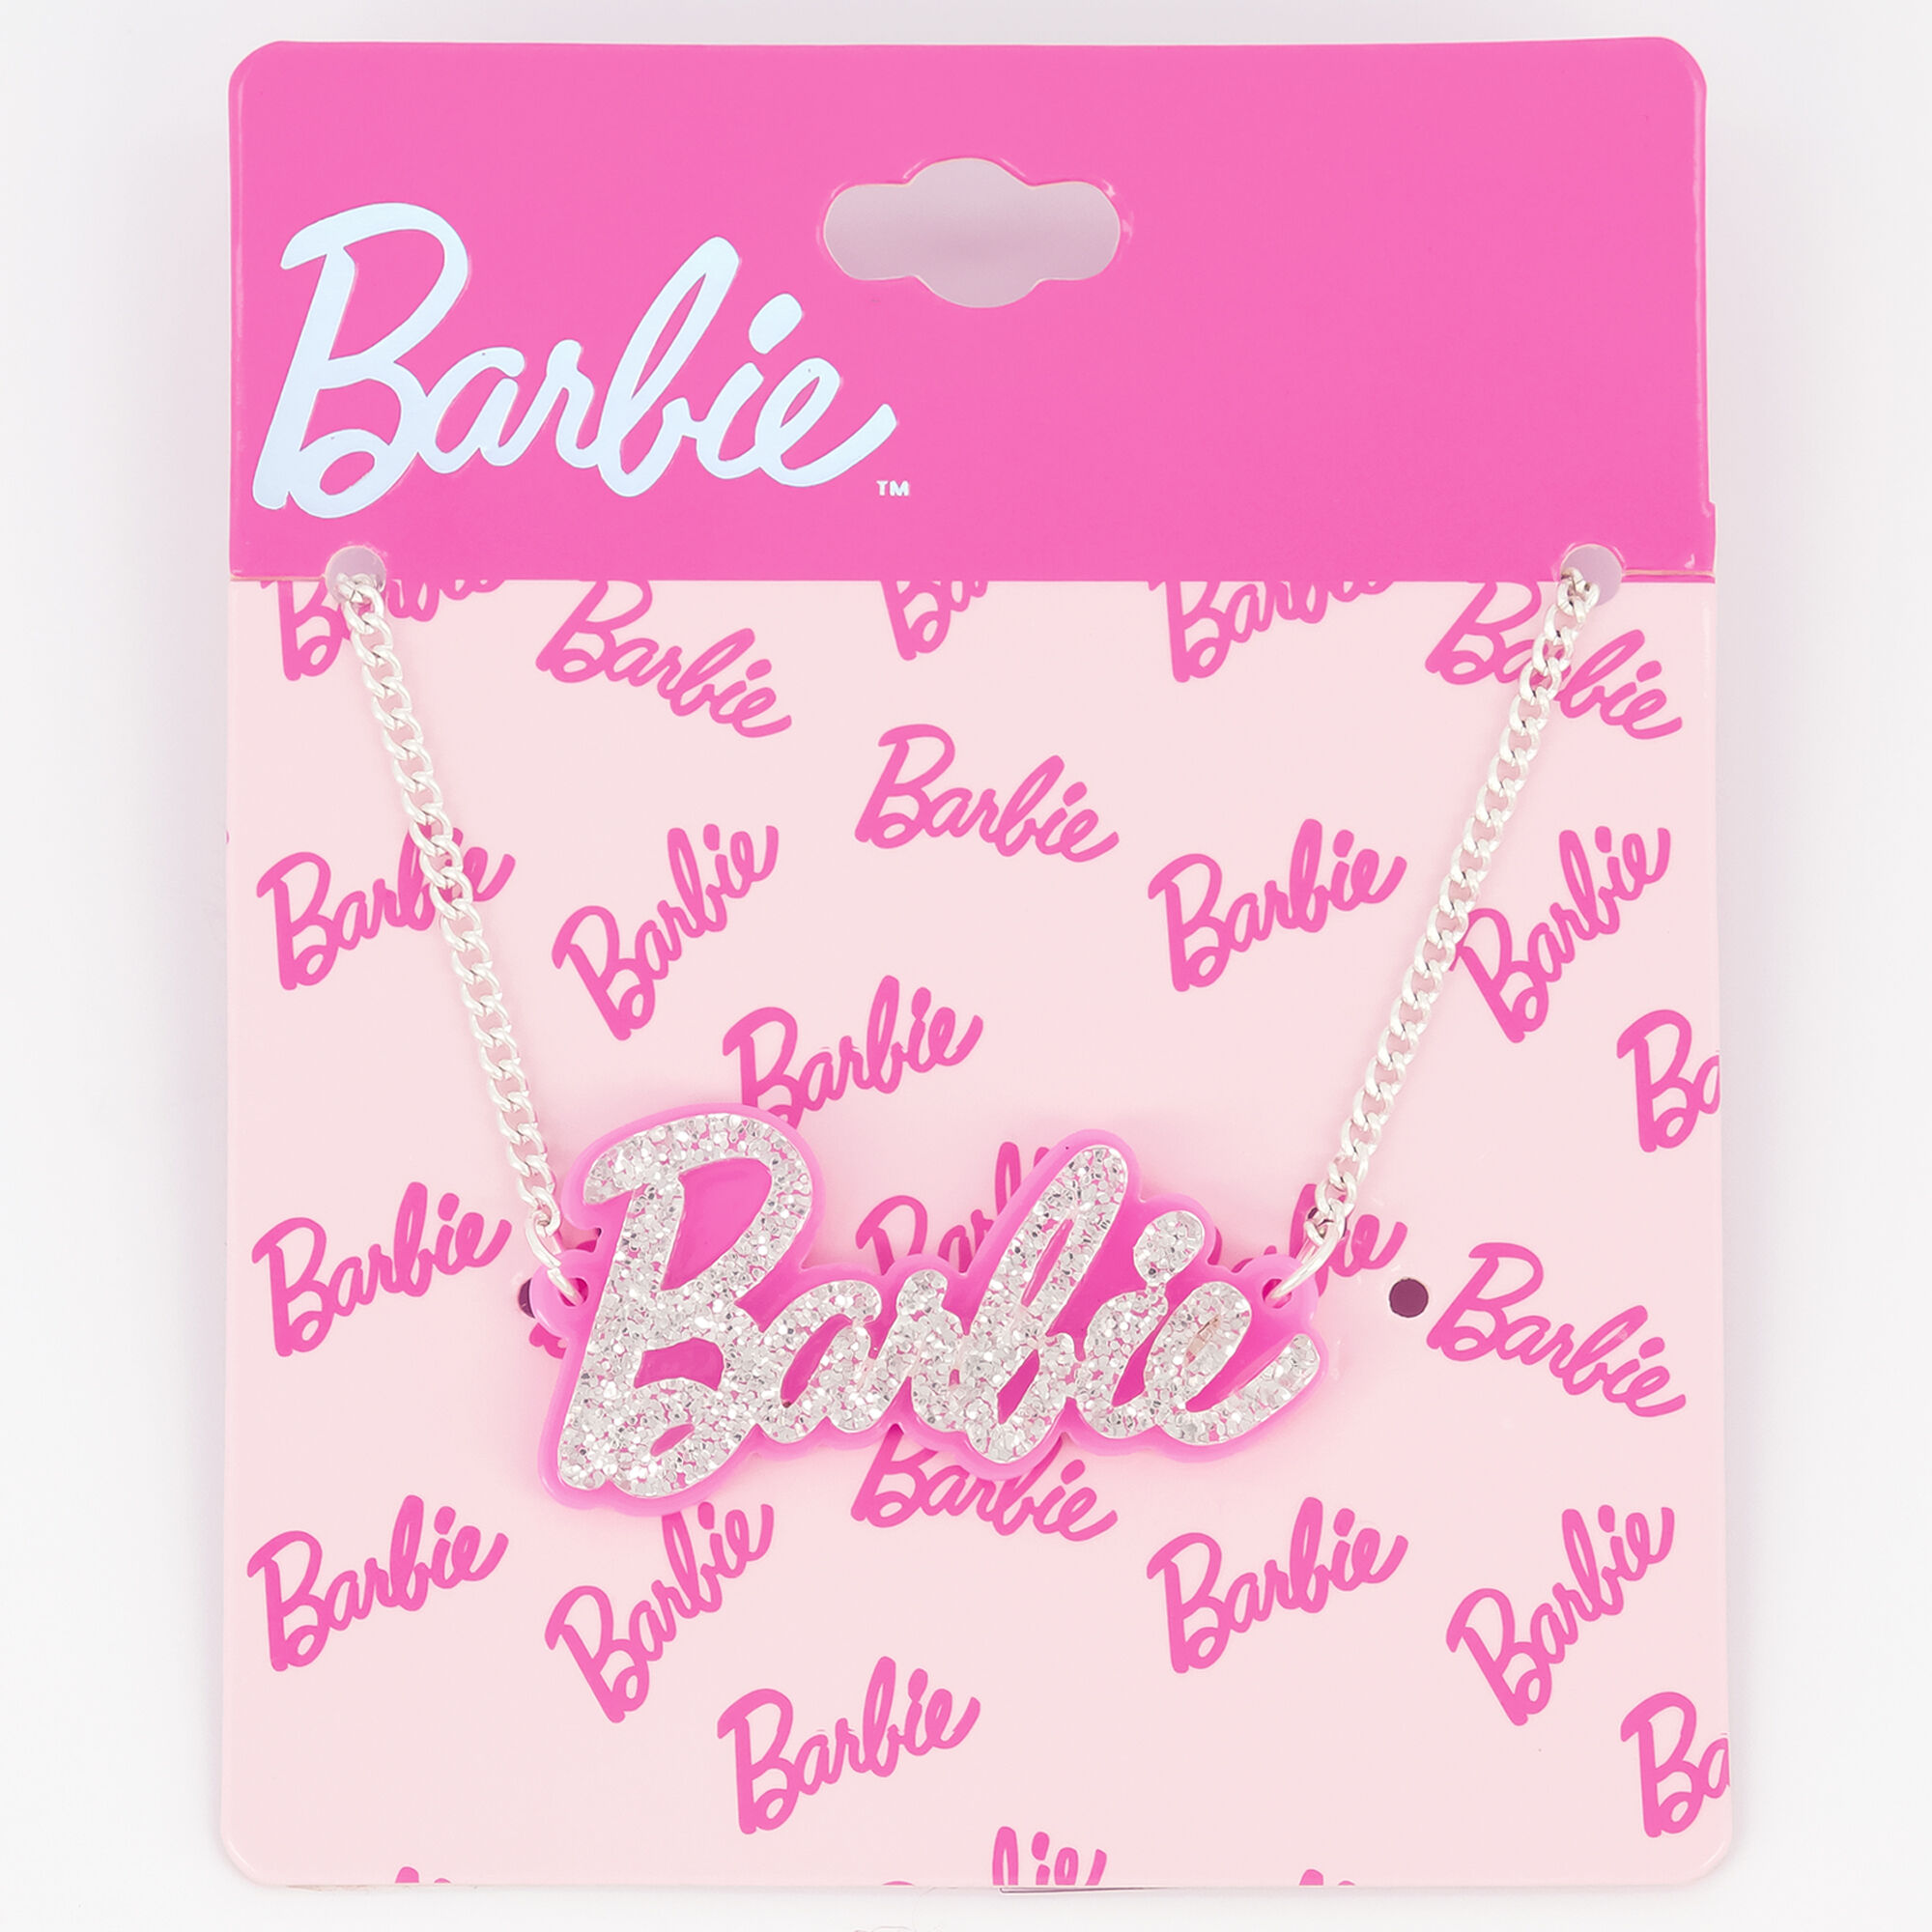 View Claires Barbie Logo Pendant Necklace Pink information